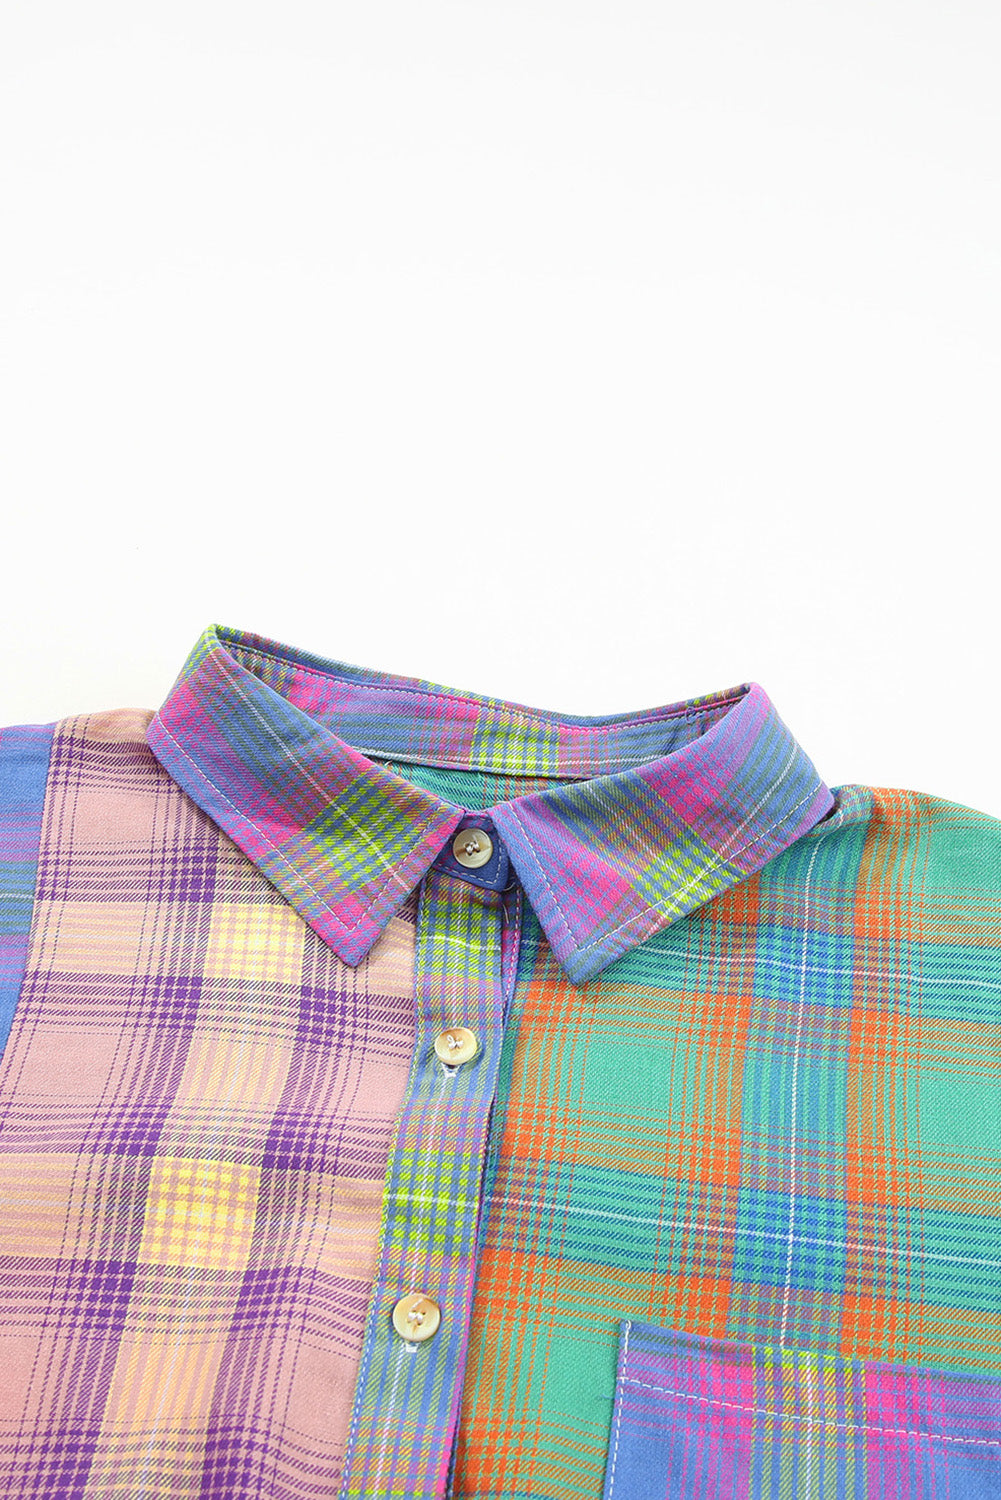 Vijolična srajca s karirastim robom v prelivu